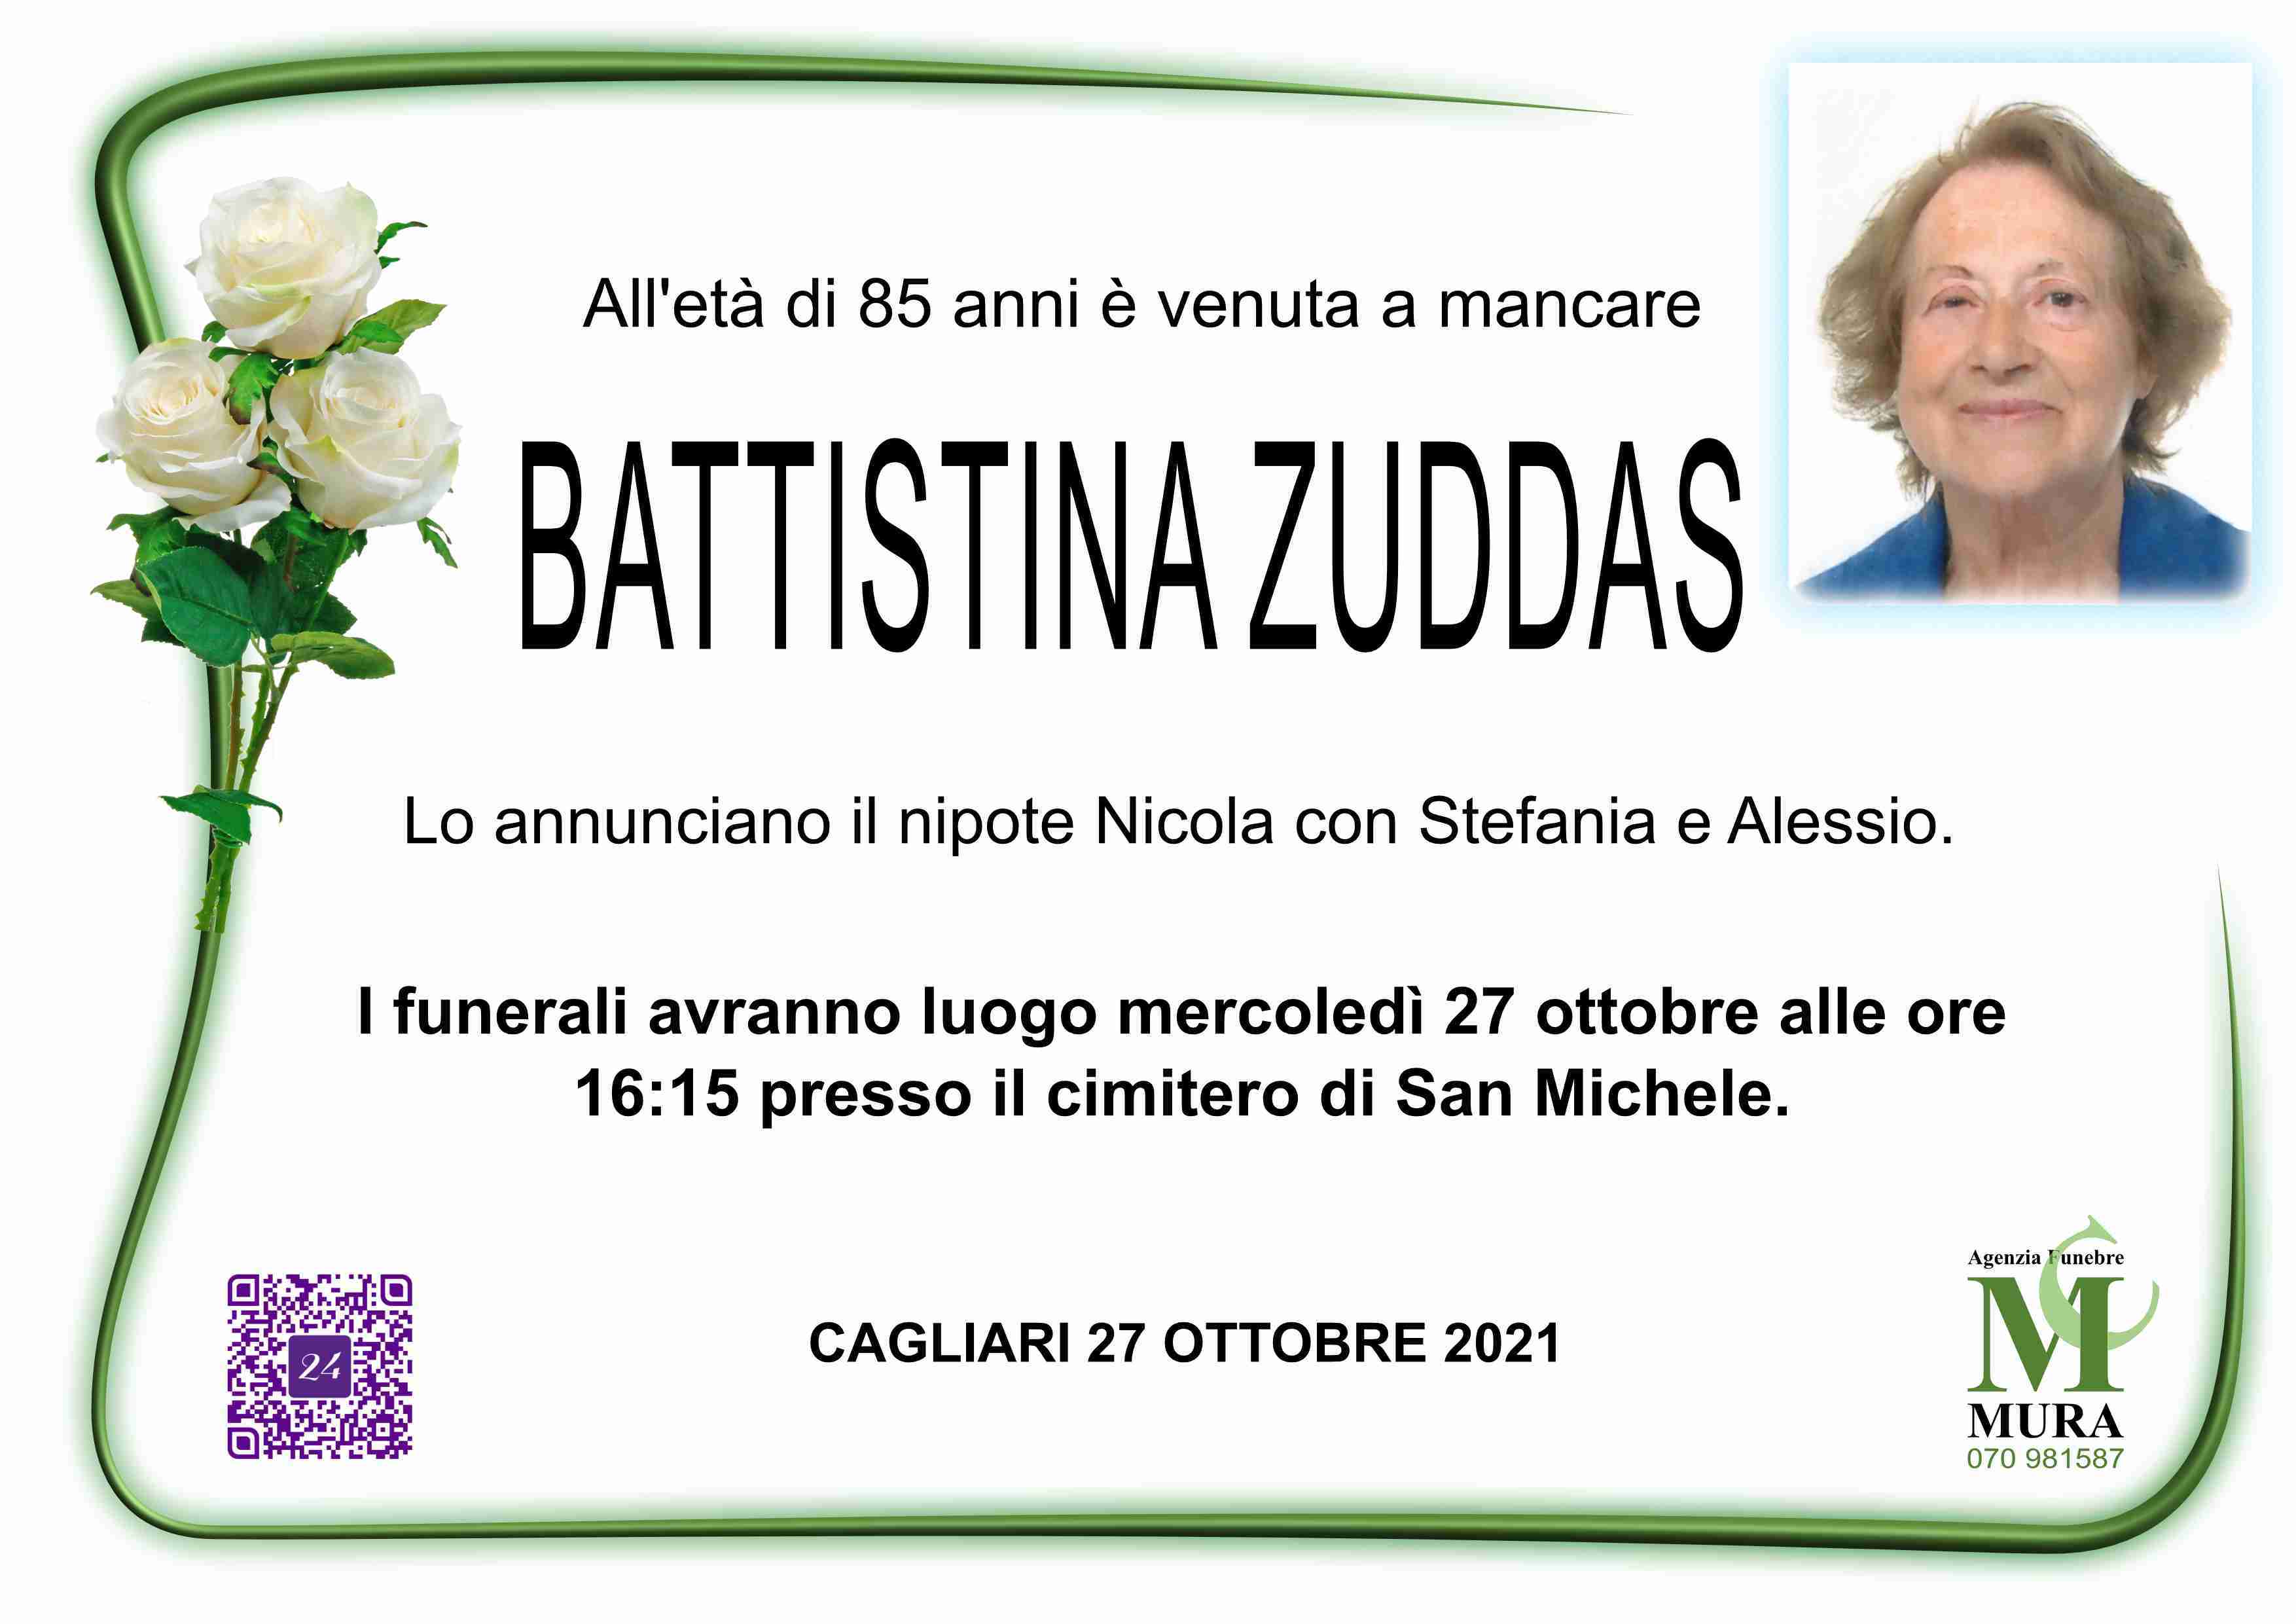 Battistina Zuddas